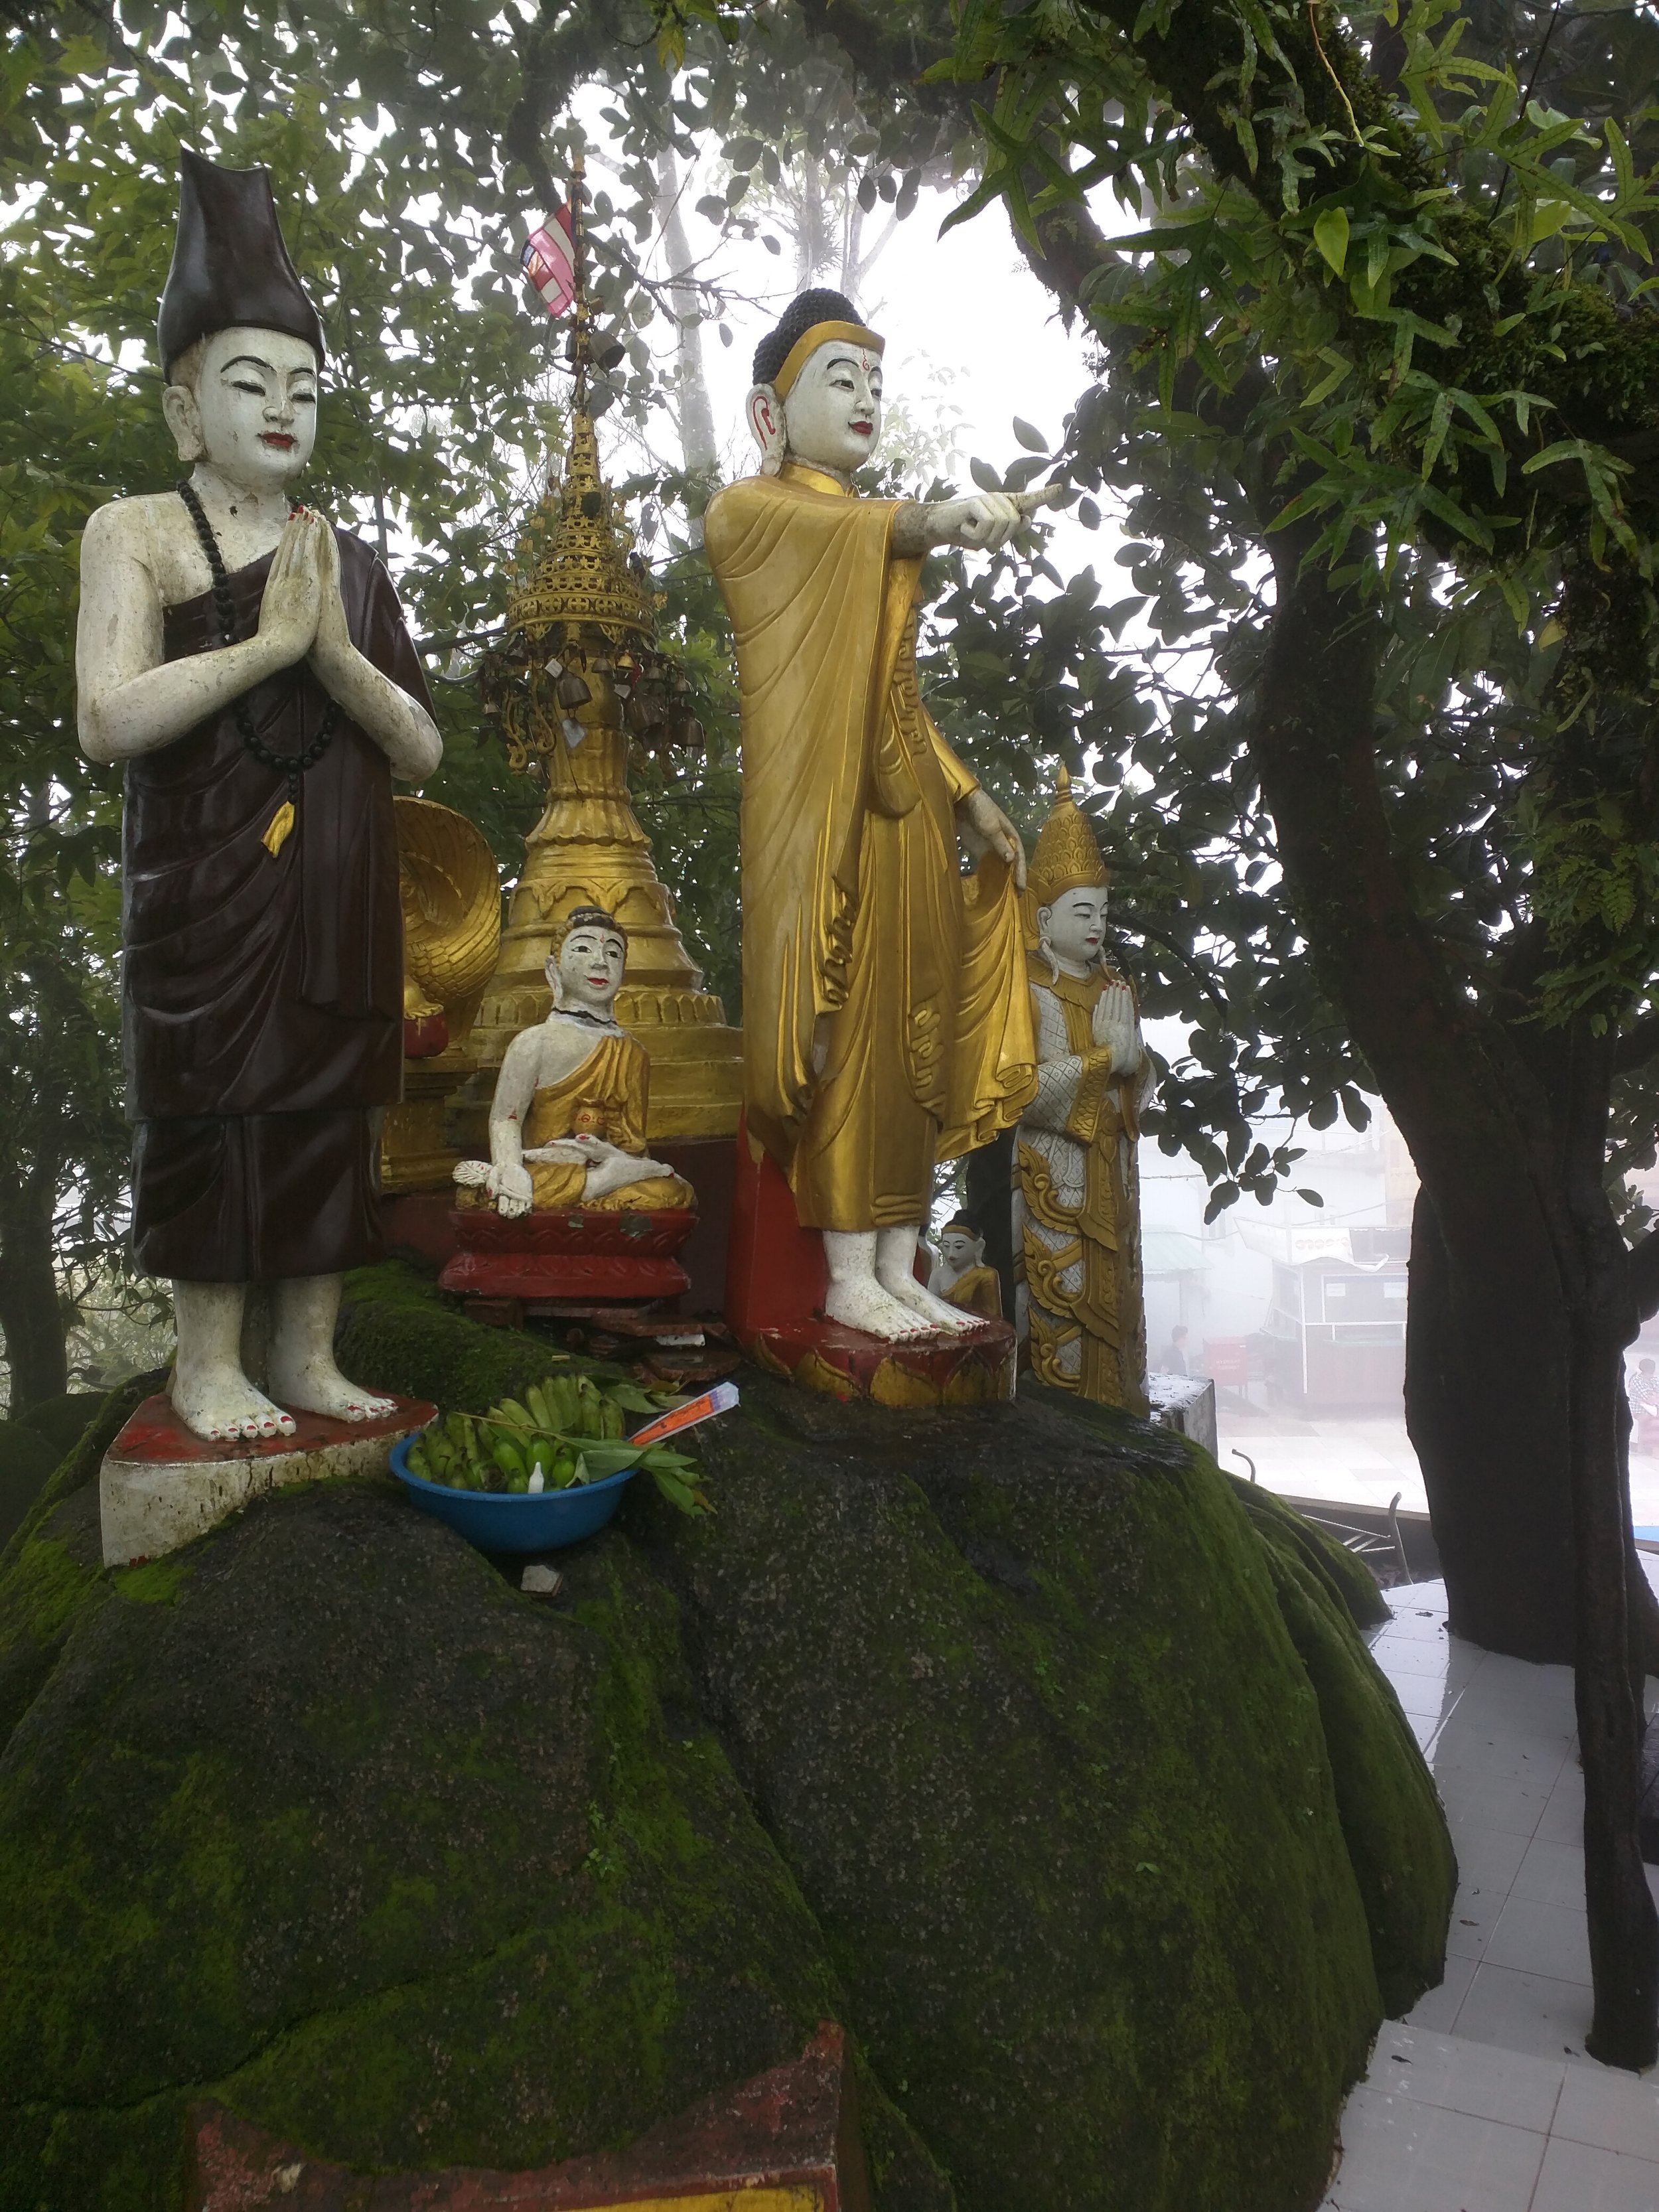 One of many shrines at Kyaiktiyo Pagoda